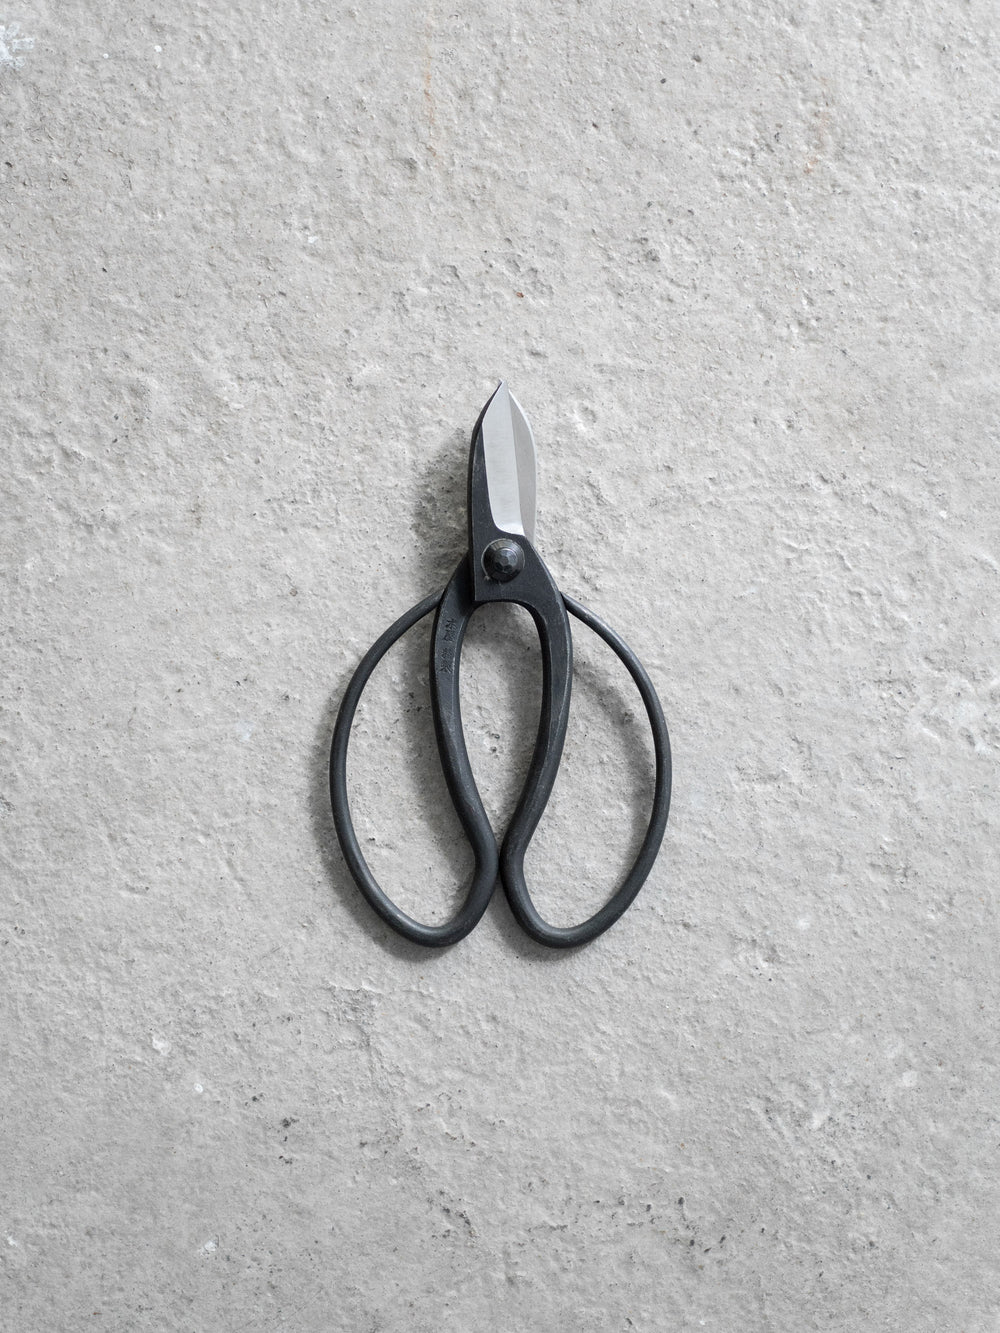 Koryu Ikebana Scissors